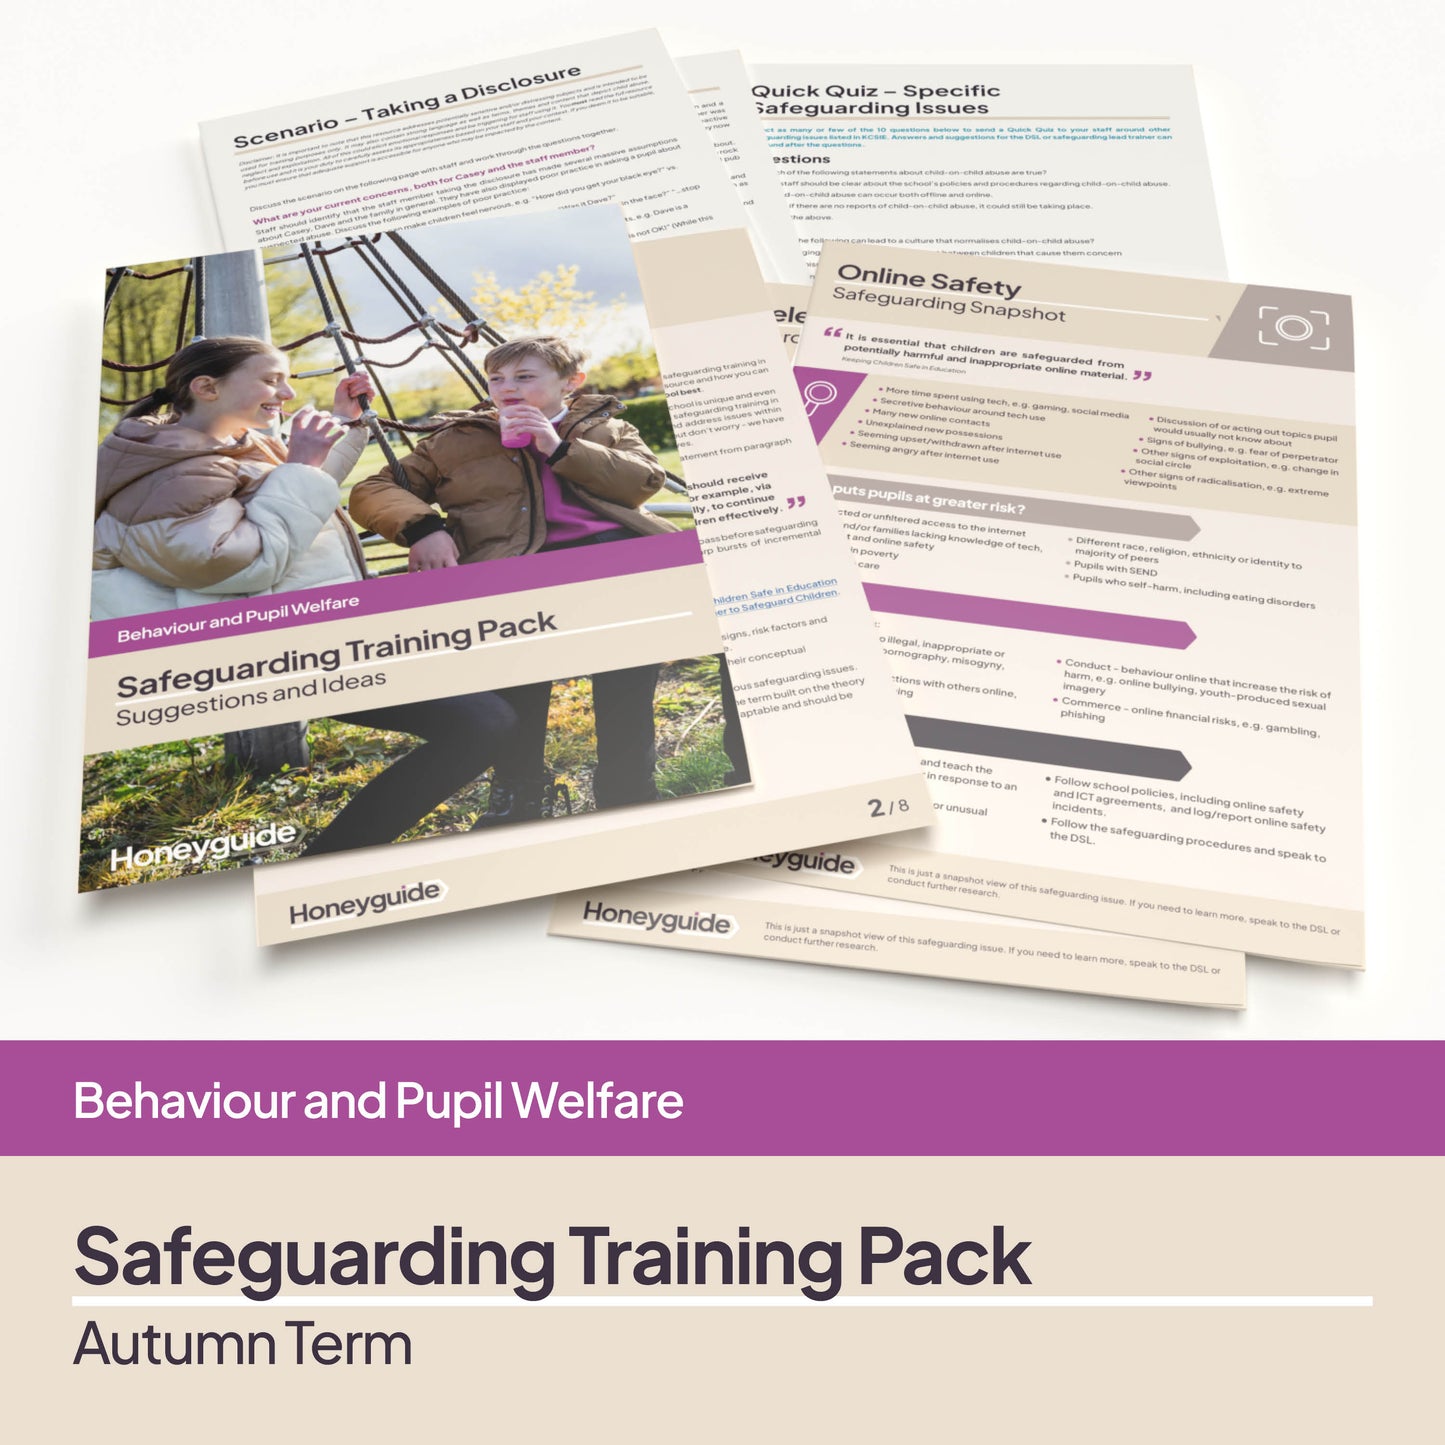 Safeguarding Training Pack - Autumn Term